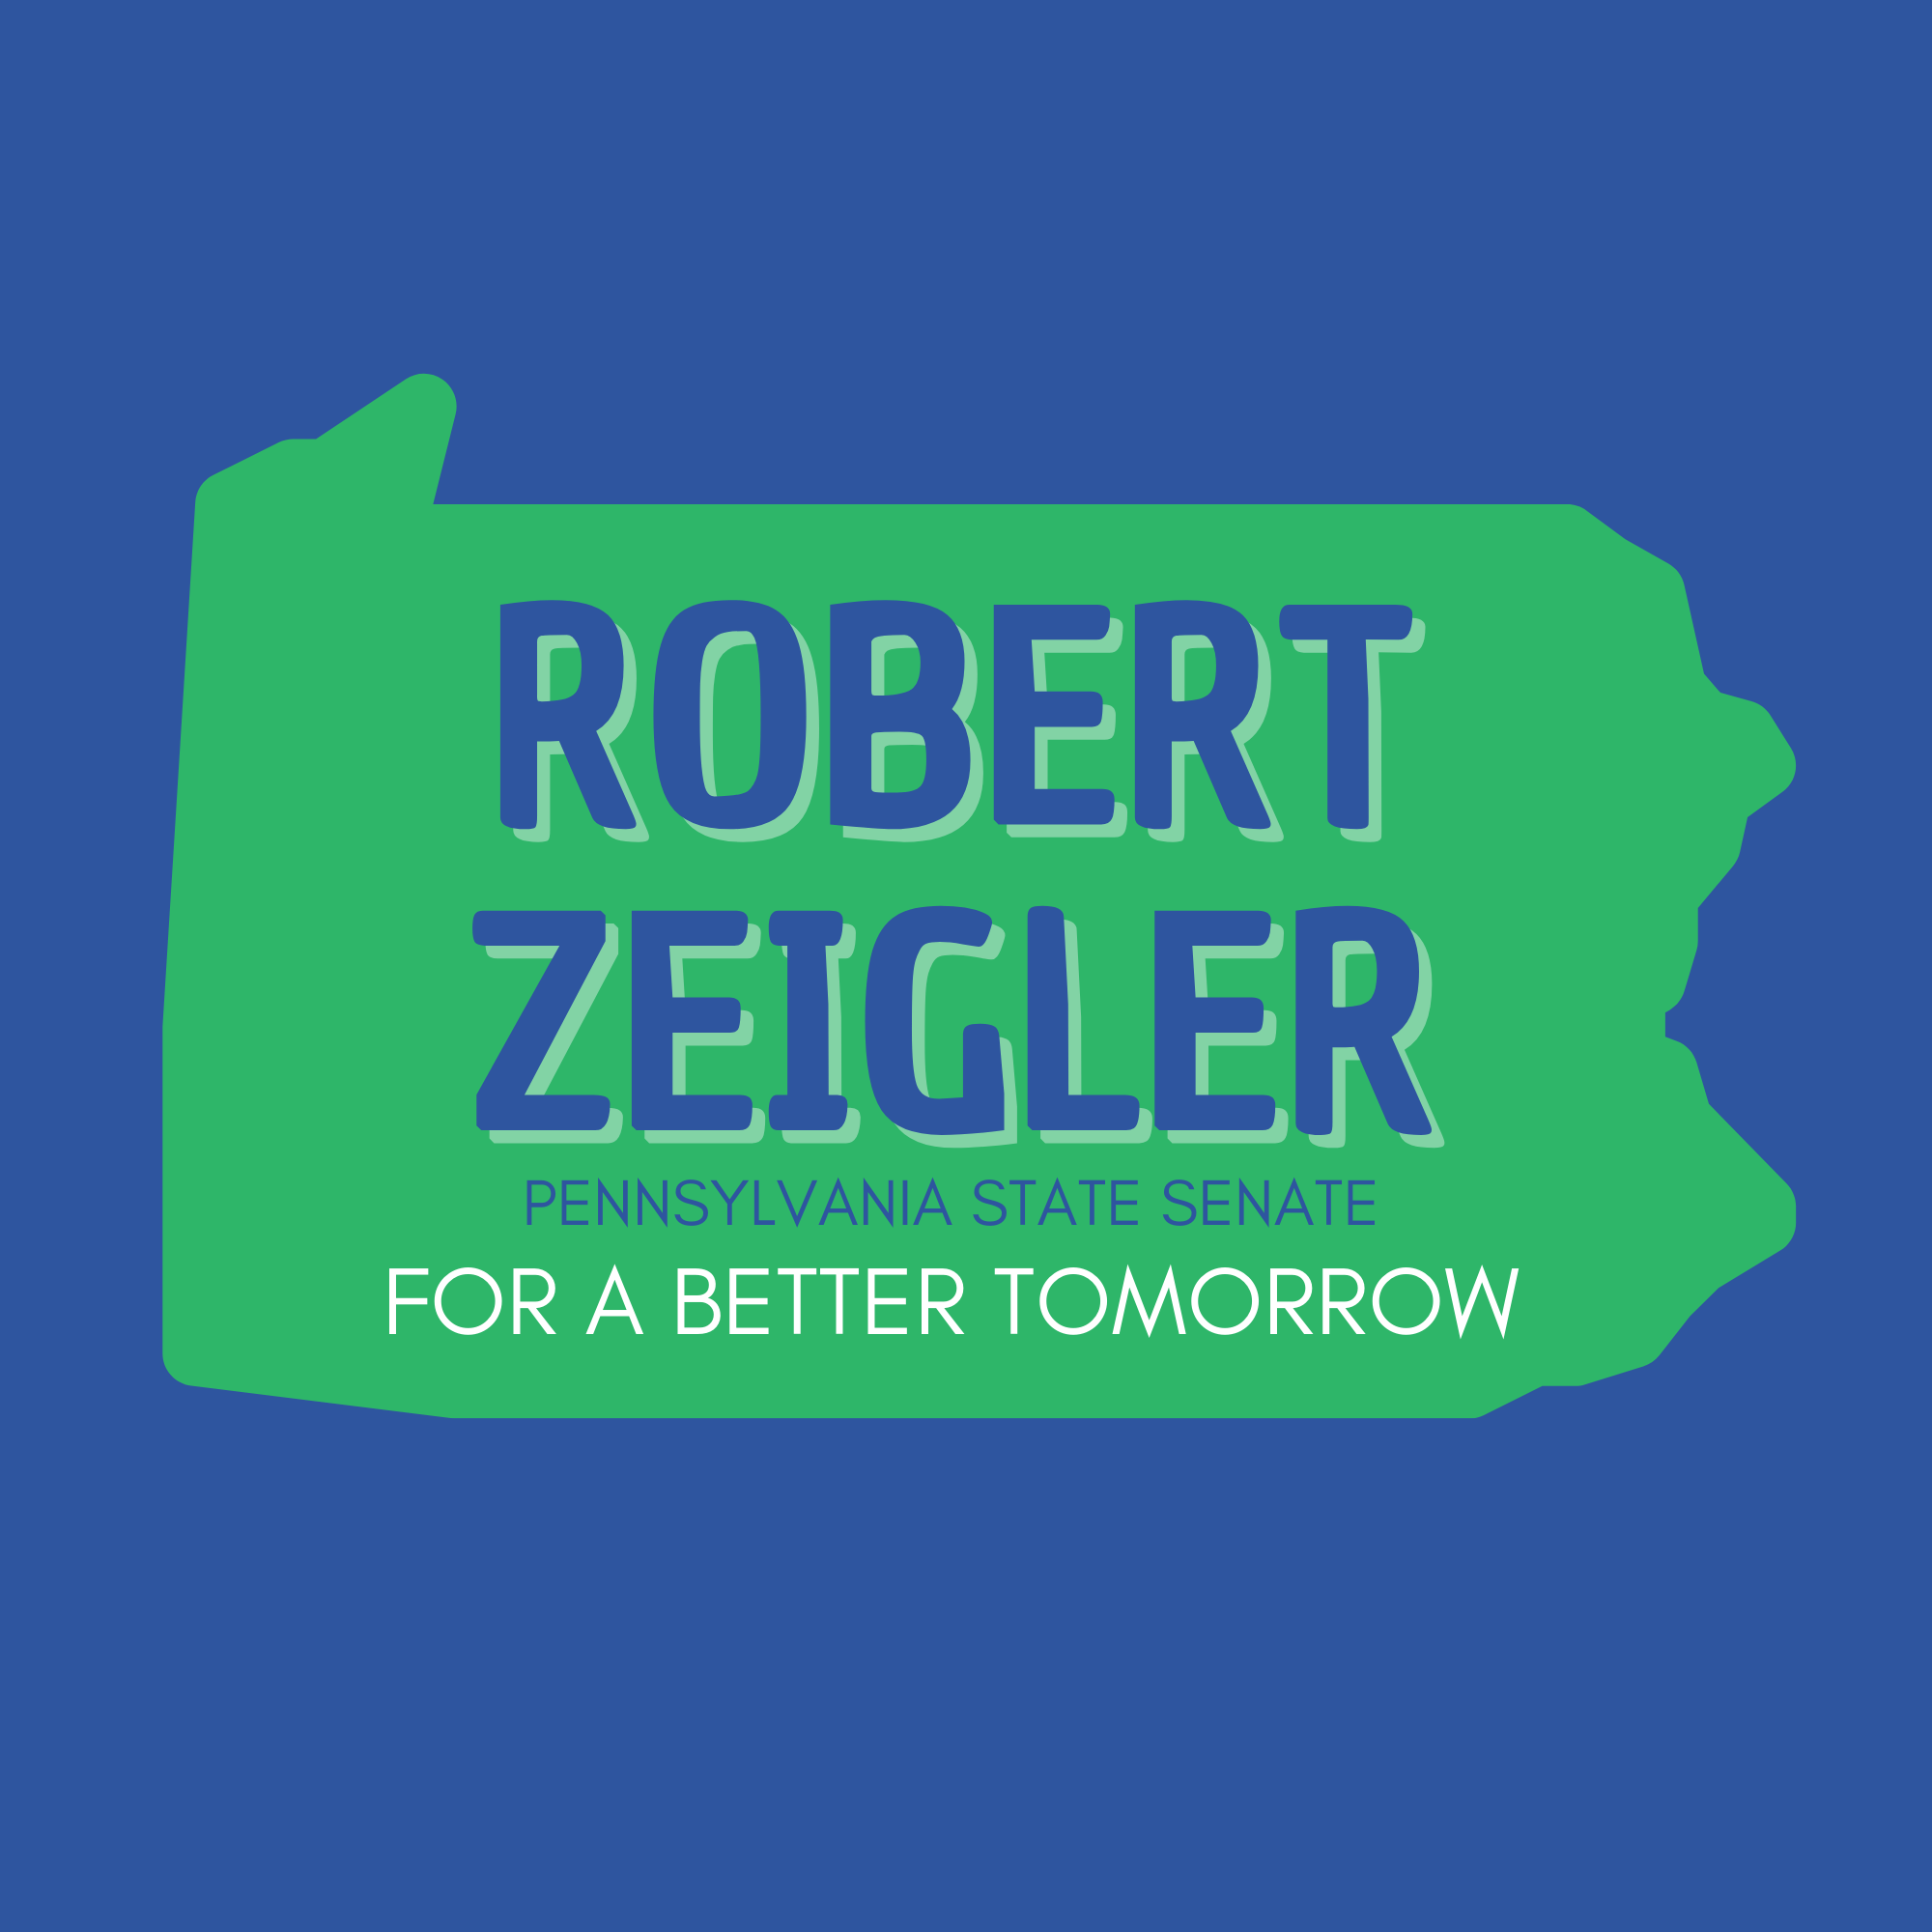 Robert Zeigler for PA Senate